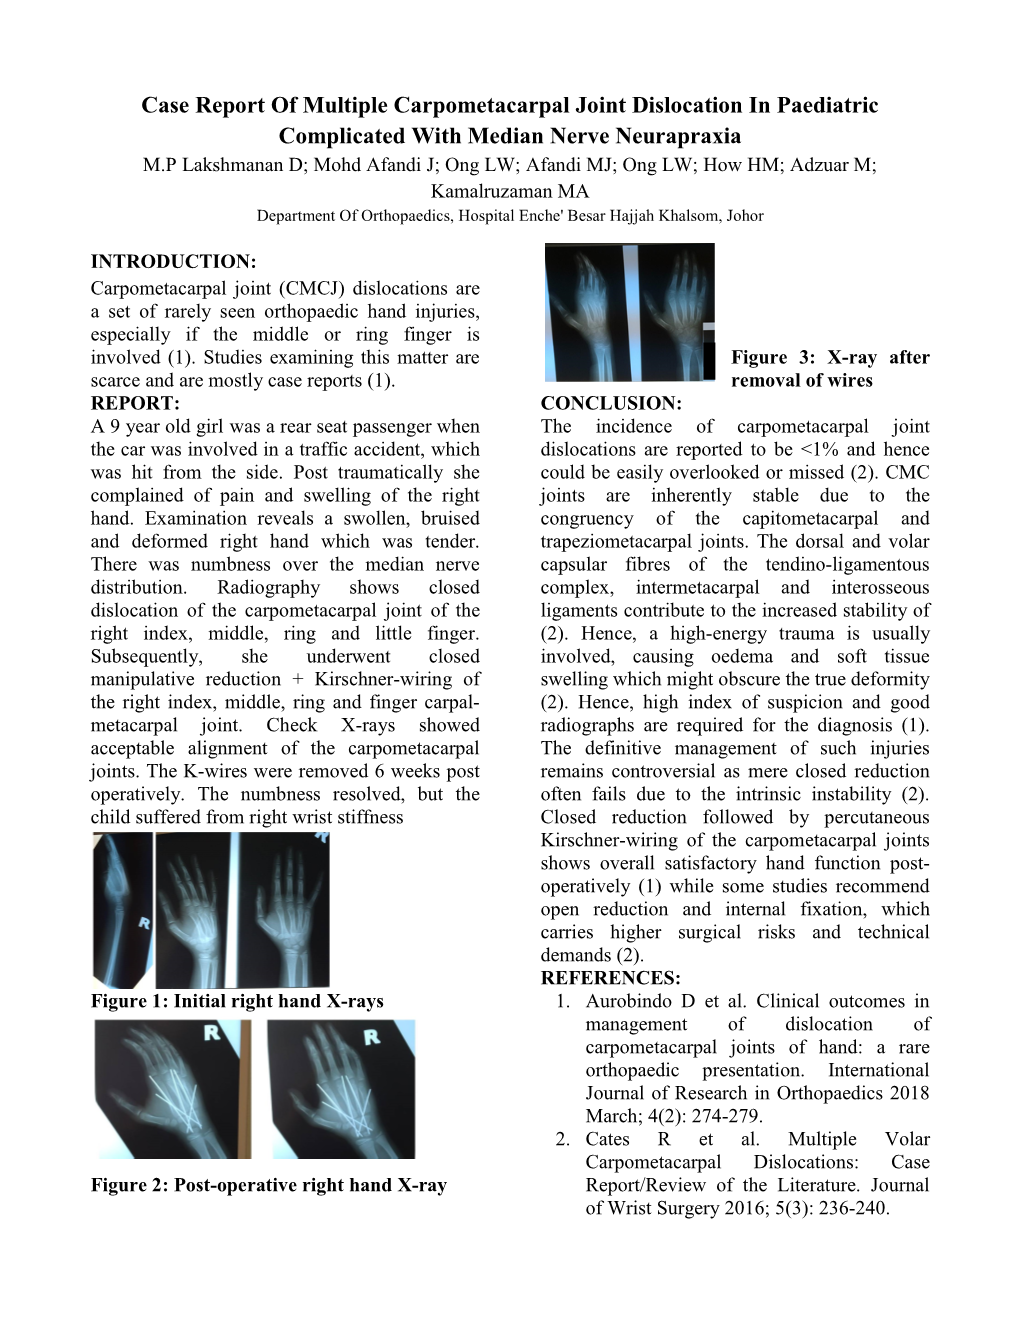 Case Report of Multiple Carpometacarpal Joint Dislocation